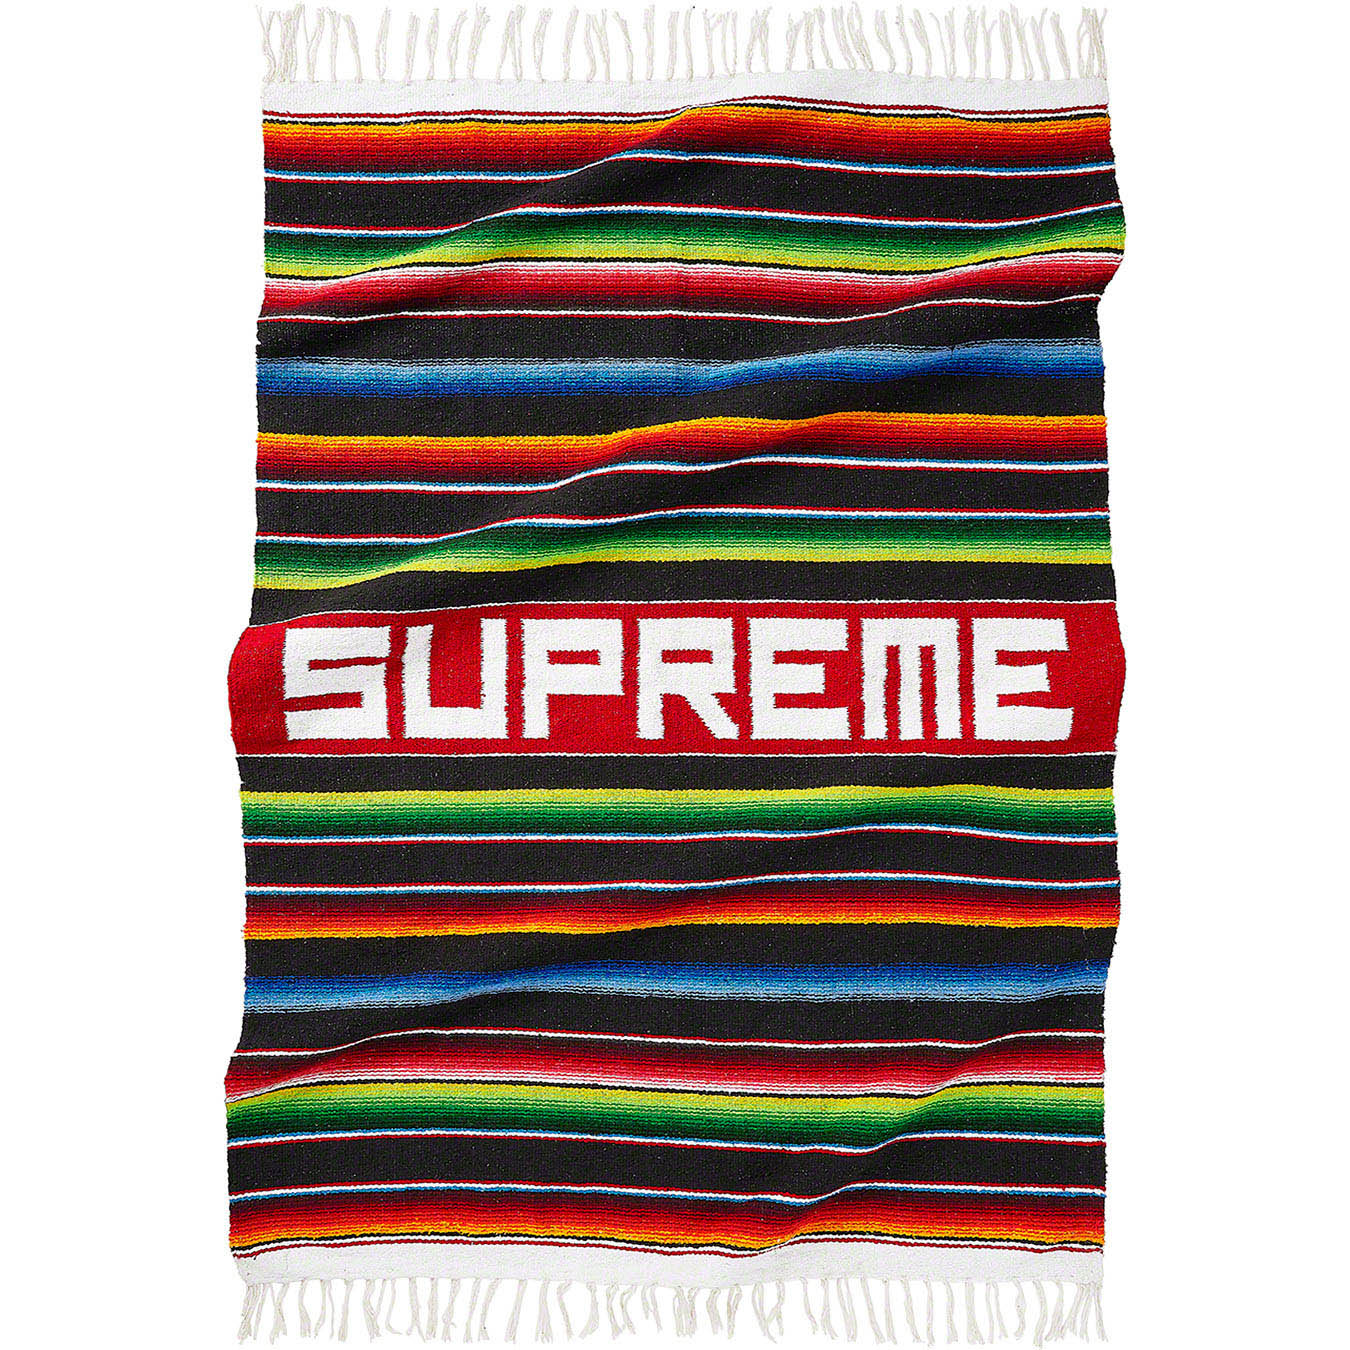 Supreme Serape Blanket